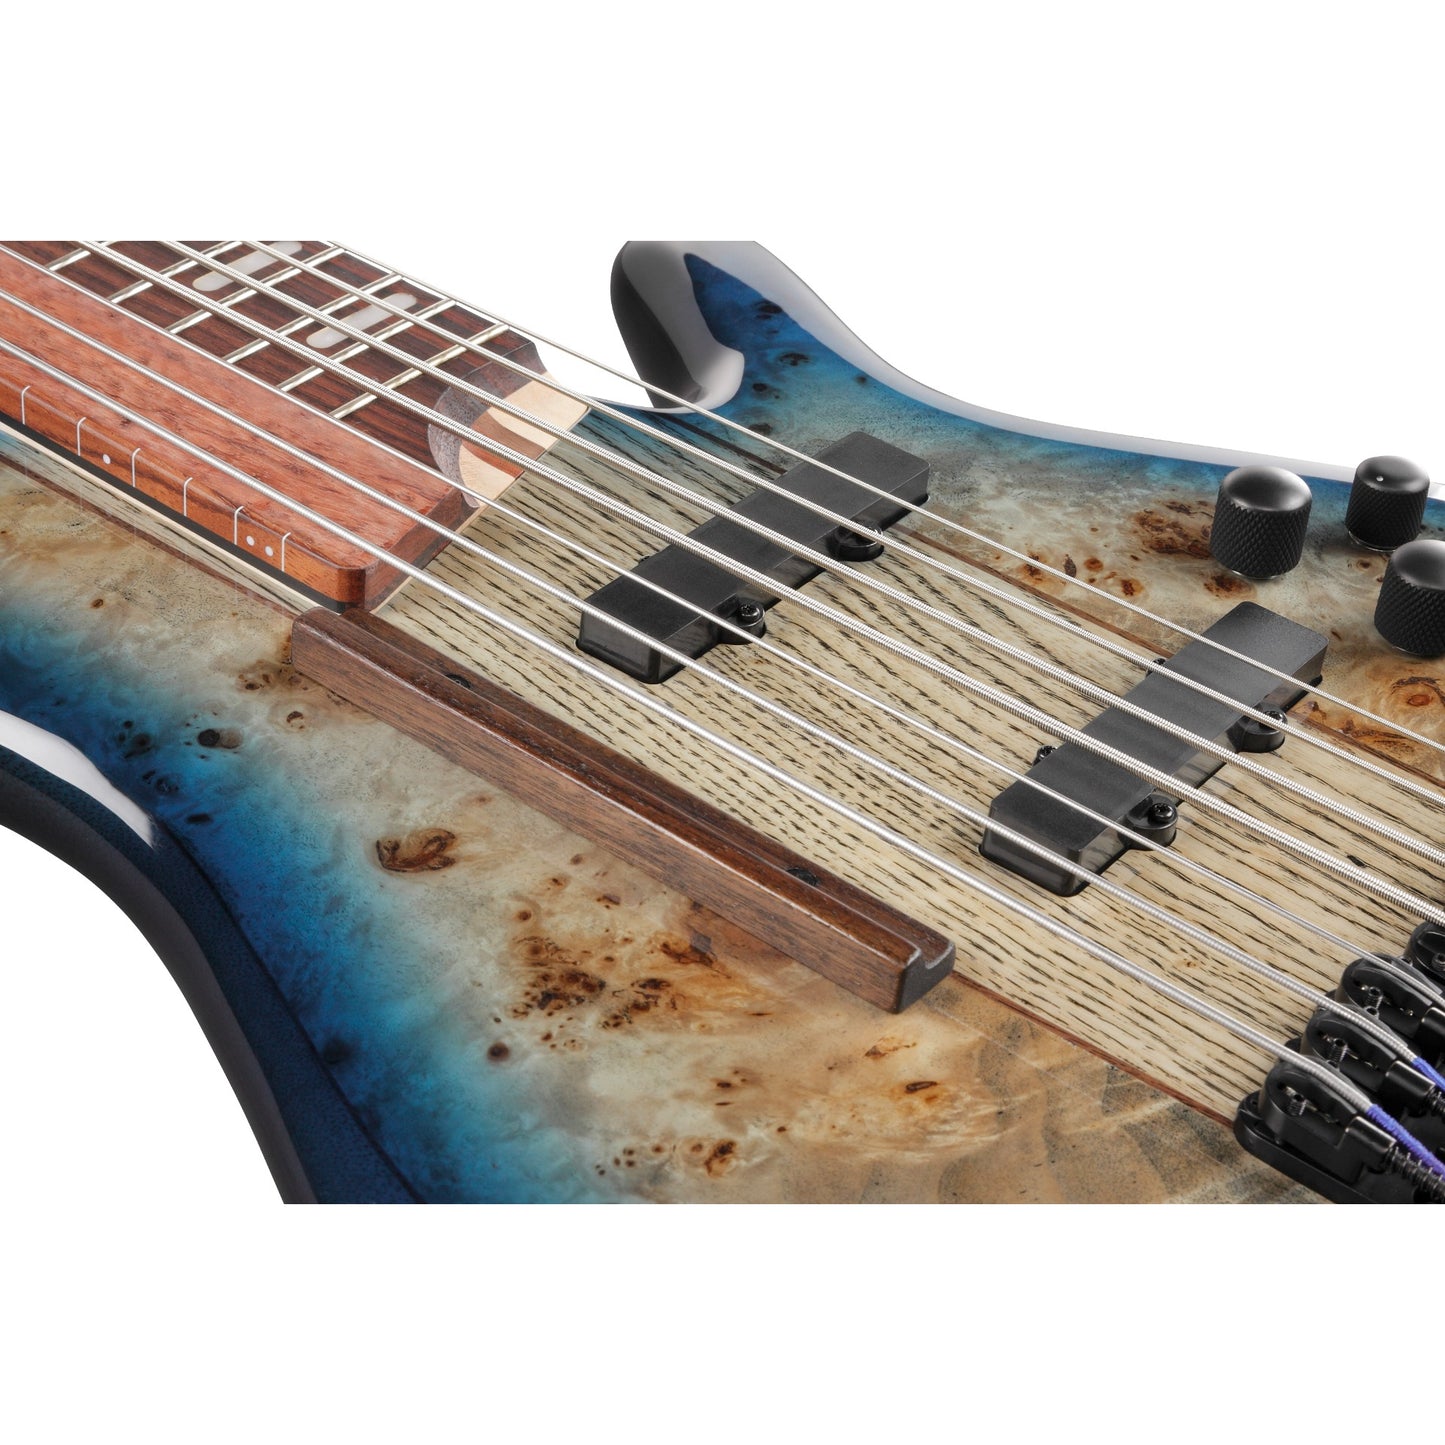 Ibanez SR Bass Workshop 7-String Electric Bass in Cosmic Blue Starburst